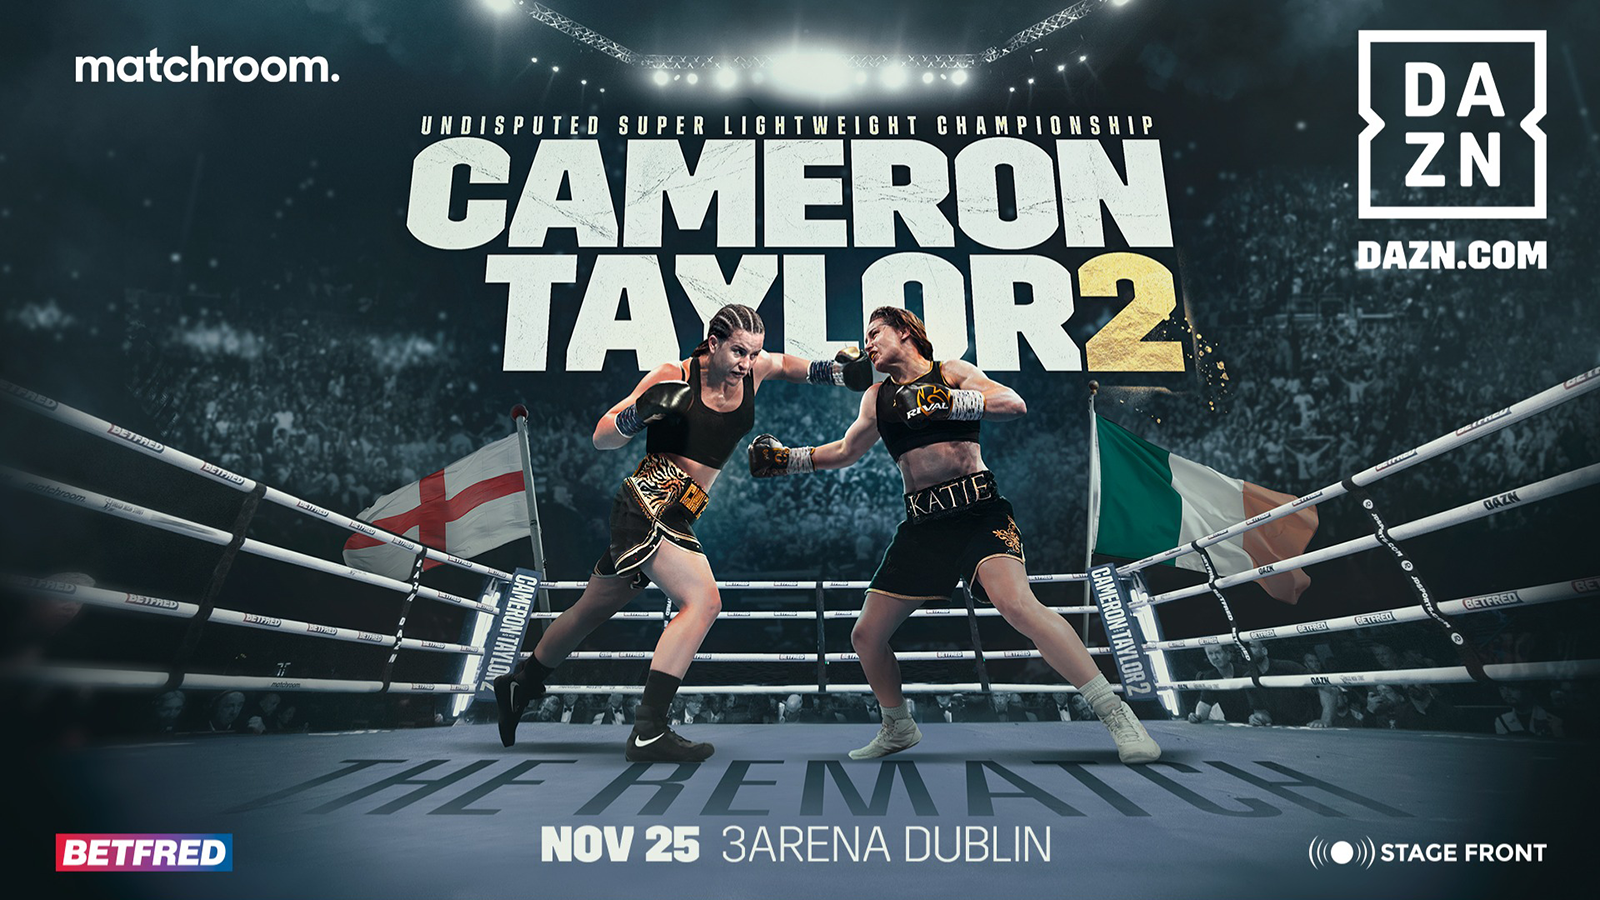 Cameron vs Taylor 2 Prediction: Will it be repeat or revenge?